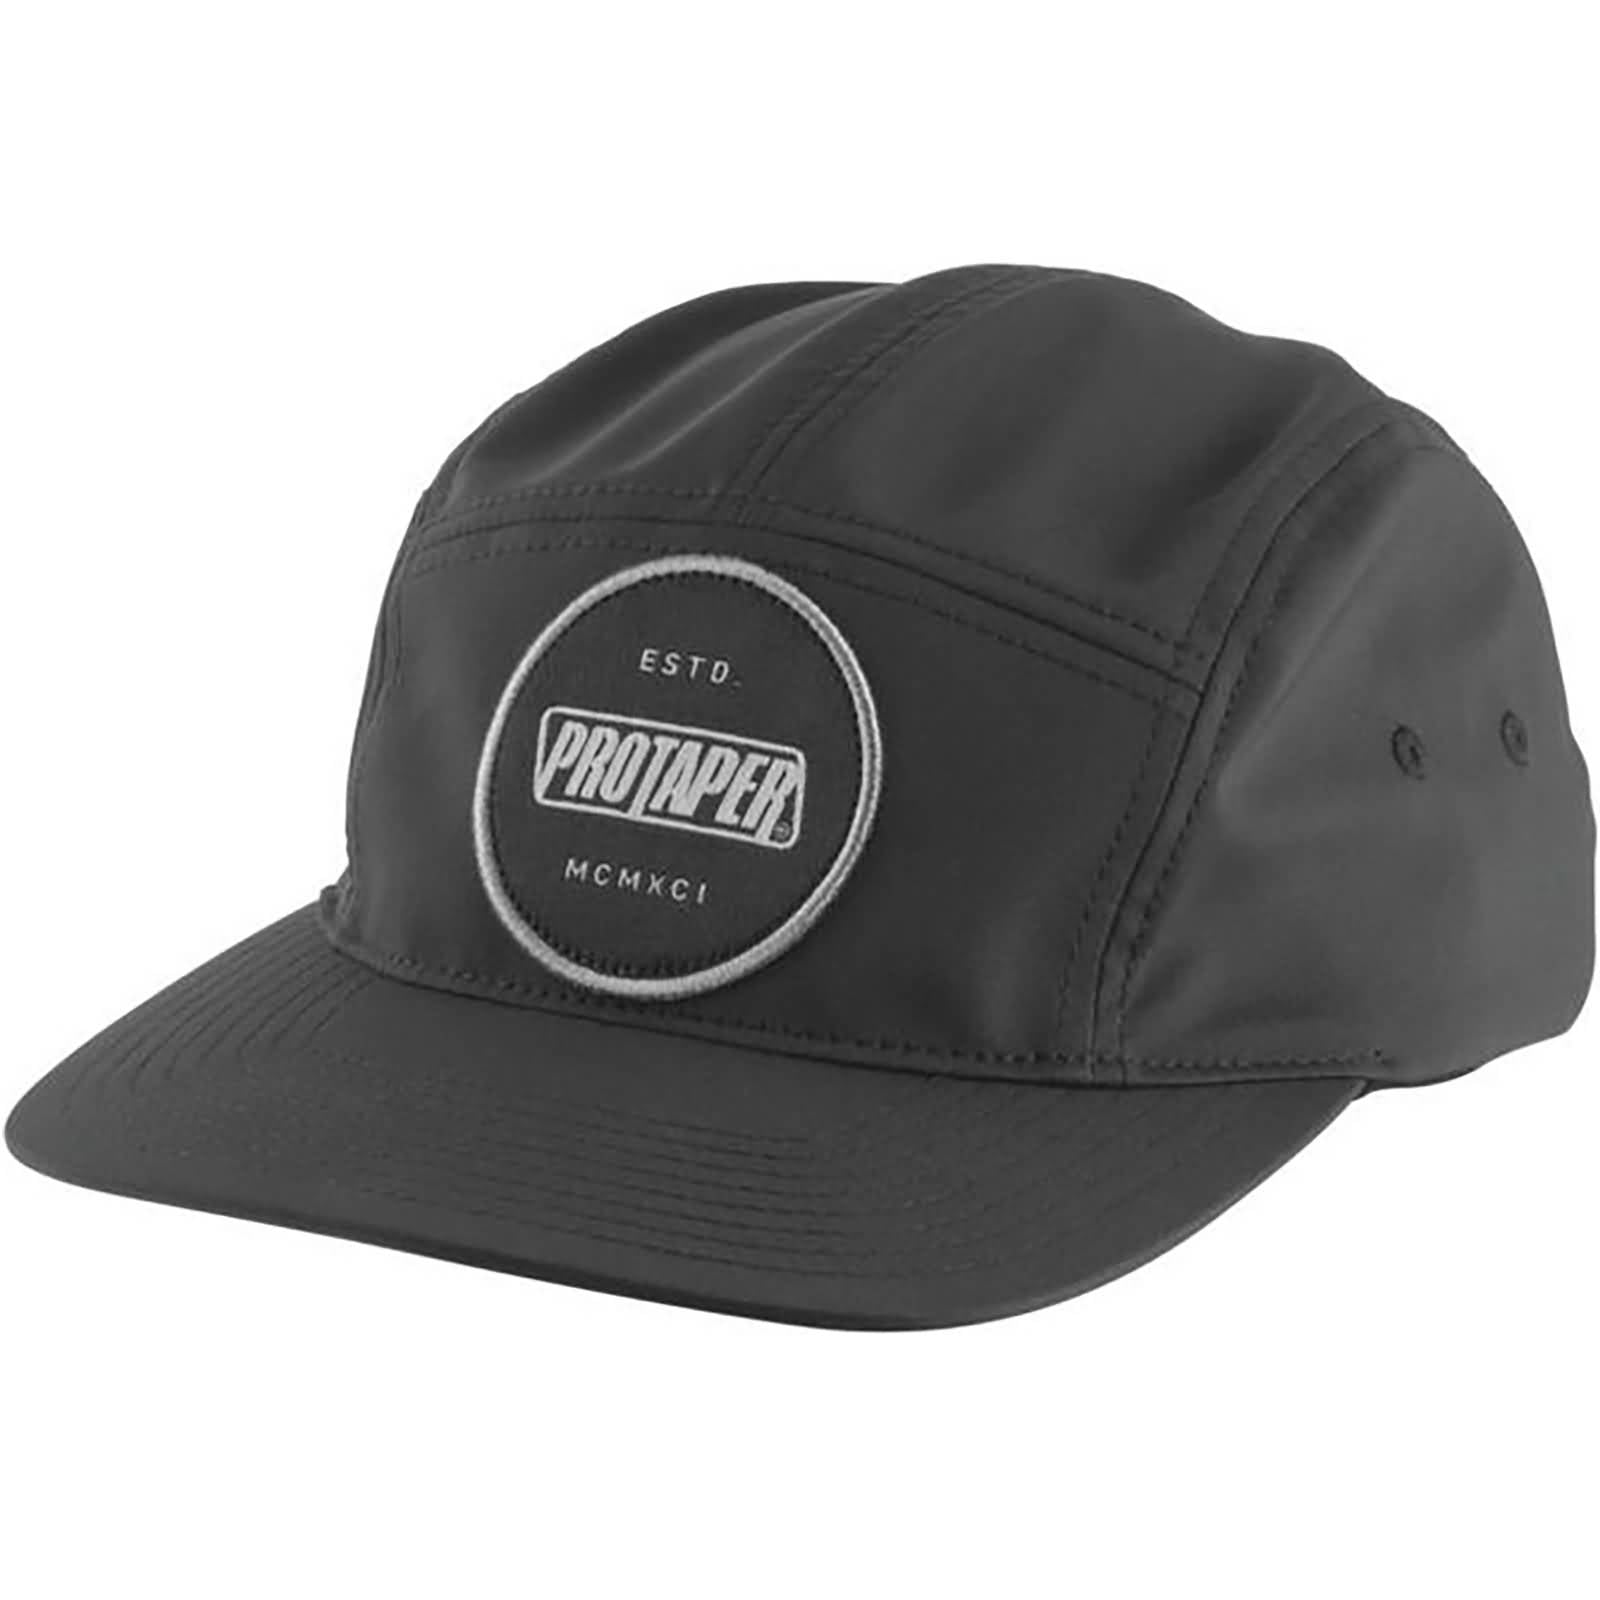 Pro Taper Roman Camper Men's Snapback Adjustable Hats-014955